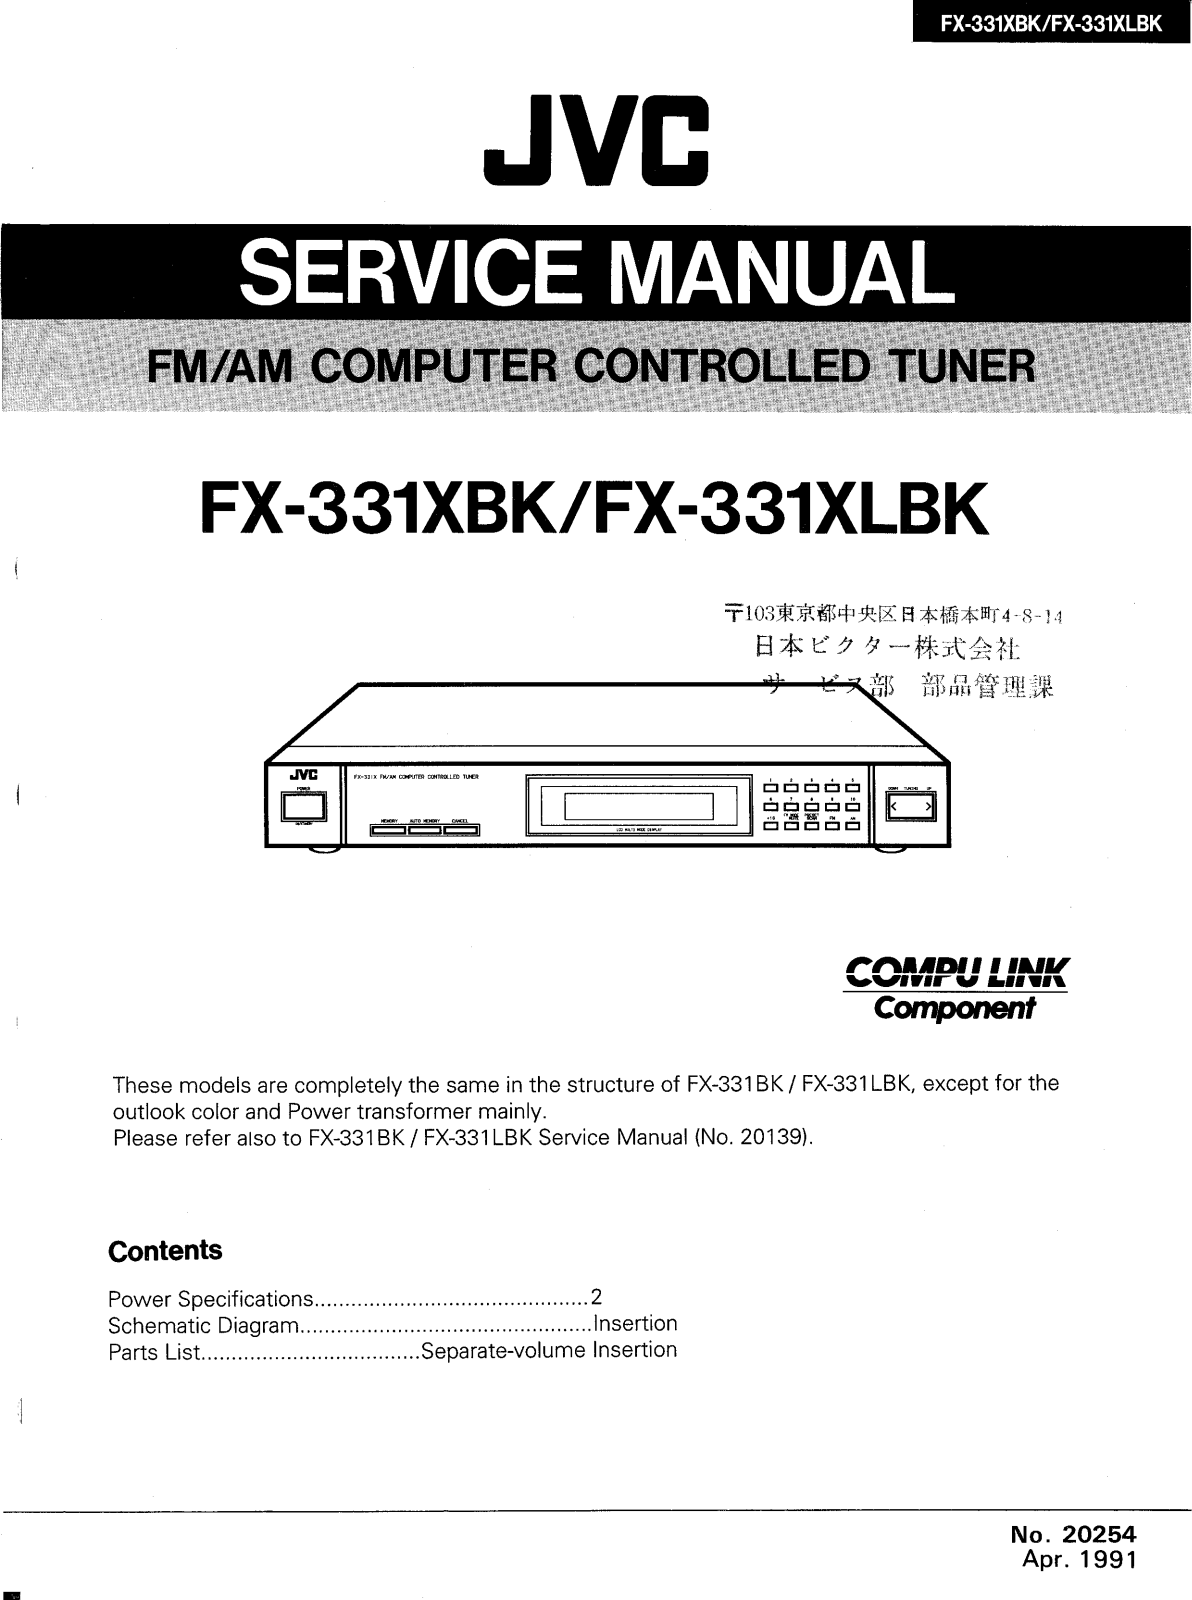 JVC FX-331-LBK Service manual